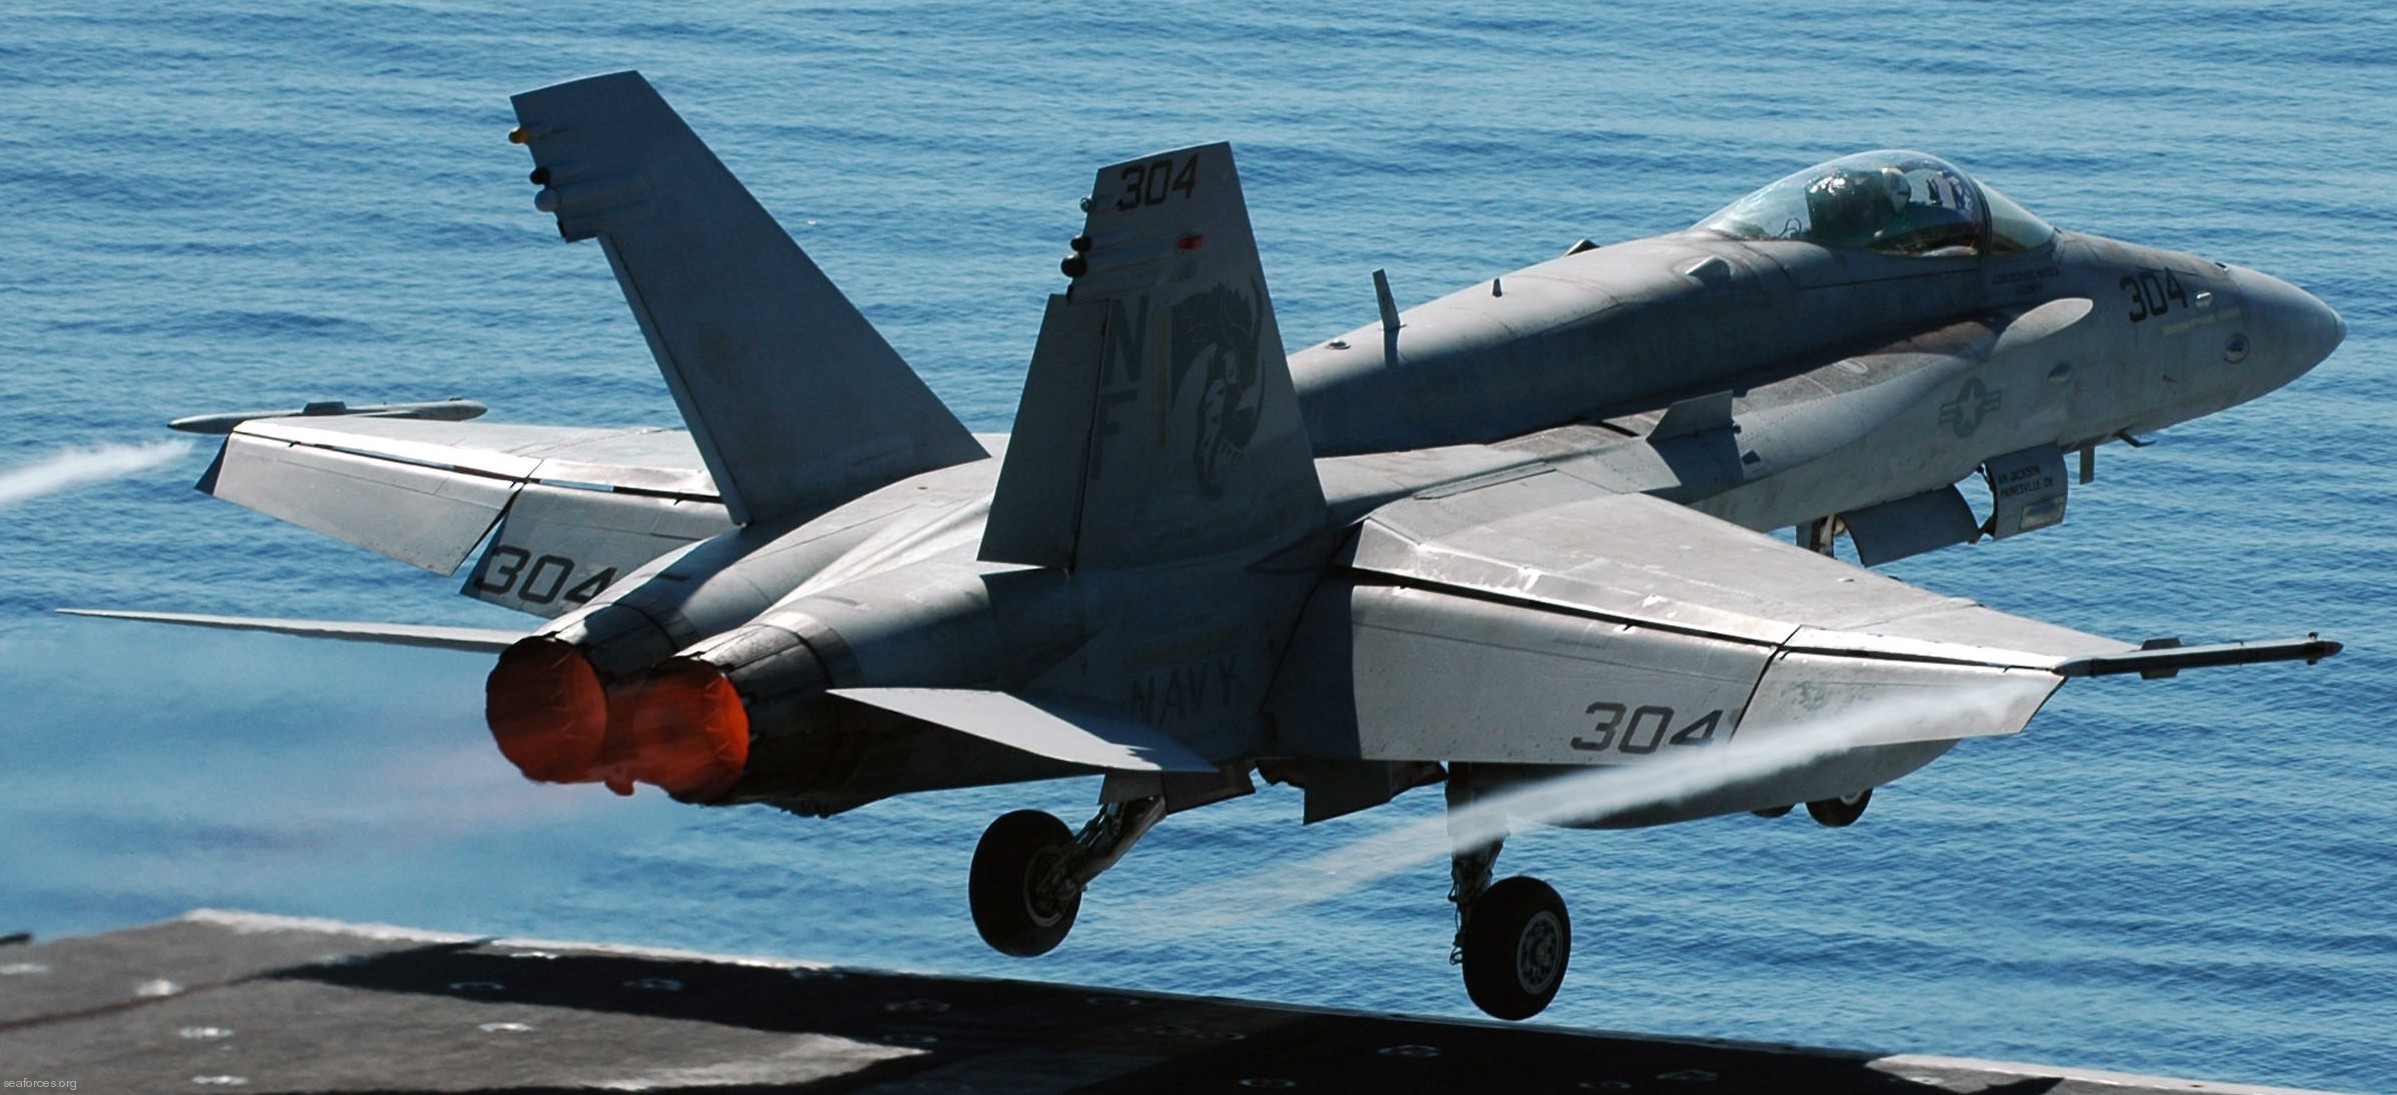 vfa-192 golden dragons strike fighter squadron navy f/a-18c hornet carrier air wing cvw-5 uss kitty hawk cv-63 59